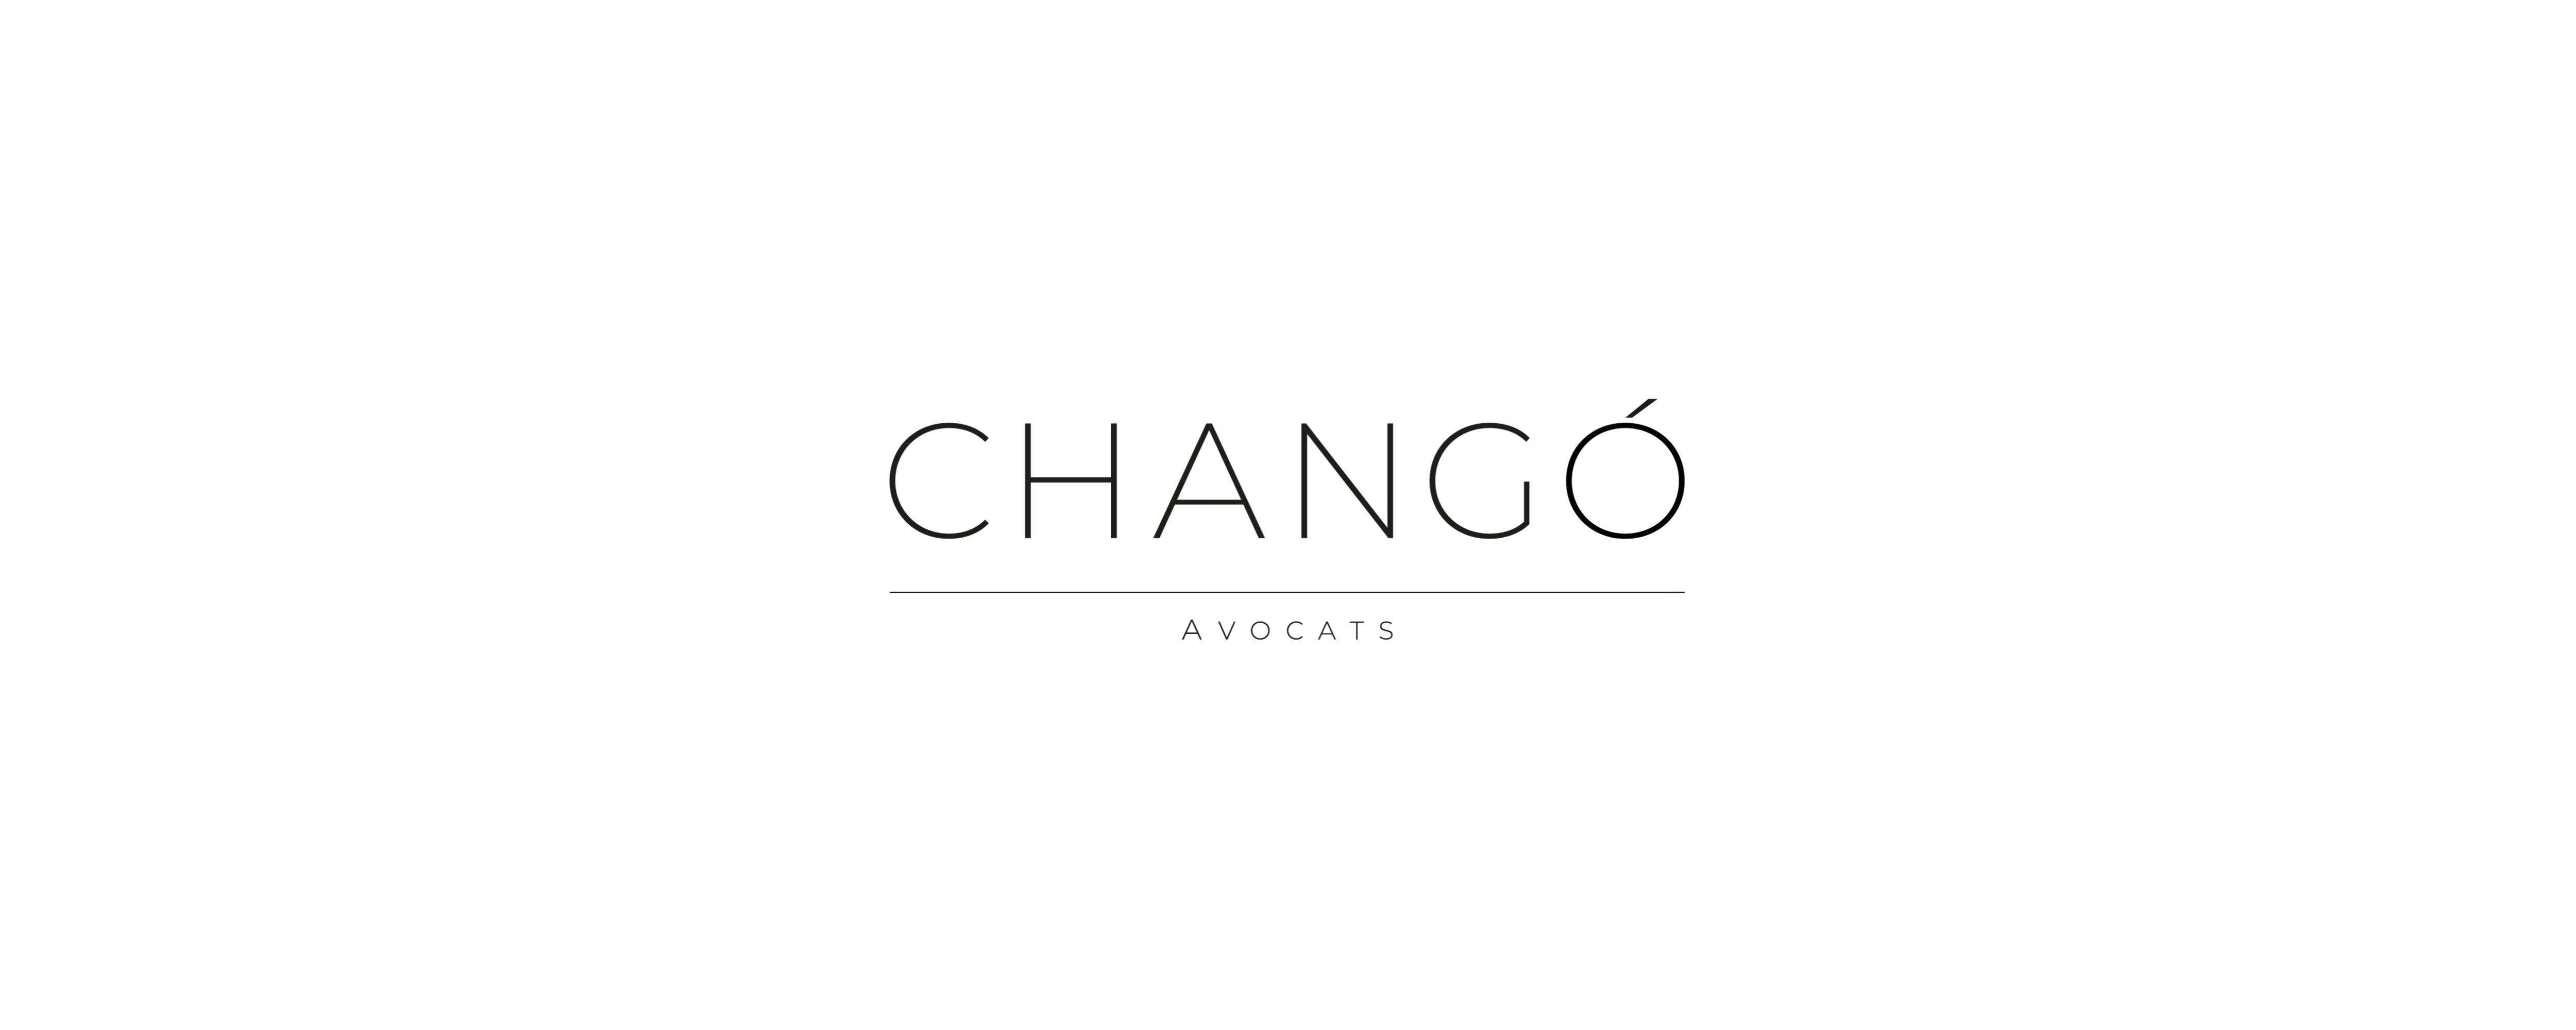 Cabinet Chango Avocats